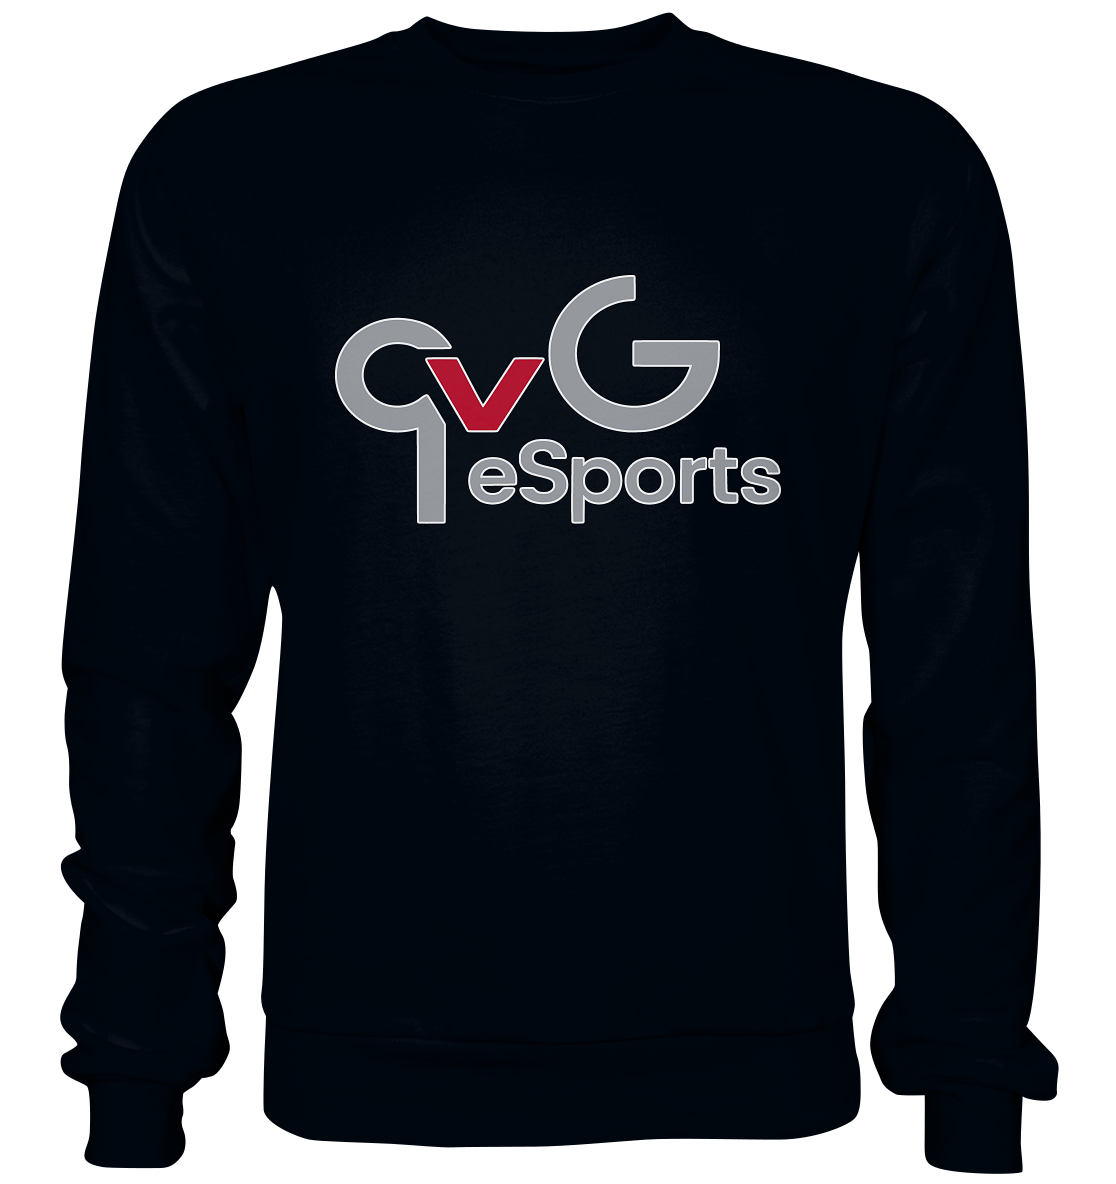 QVG ESPORTS - Basic Sweatshirt